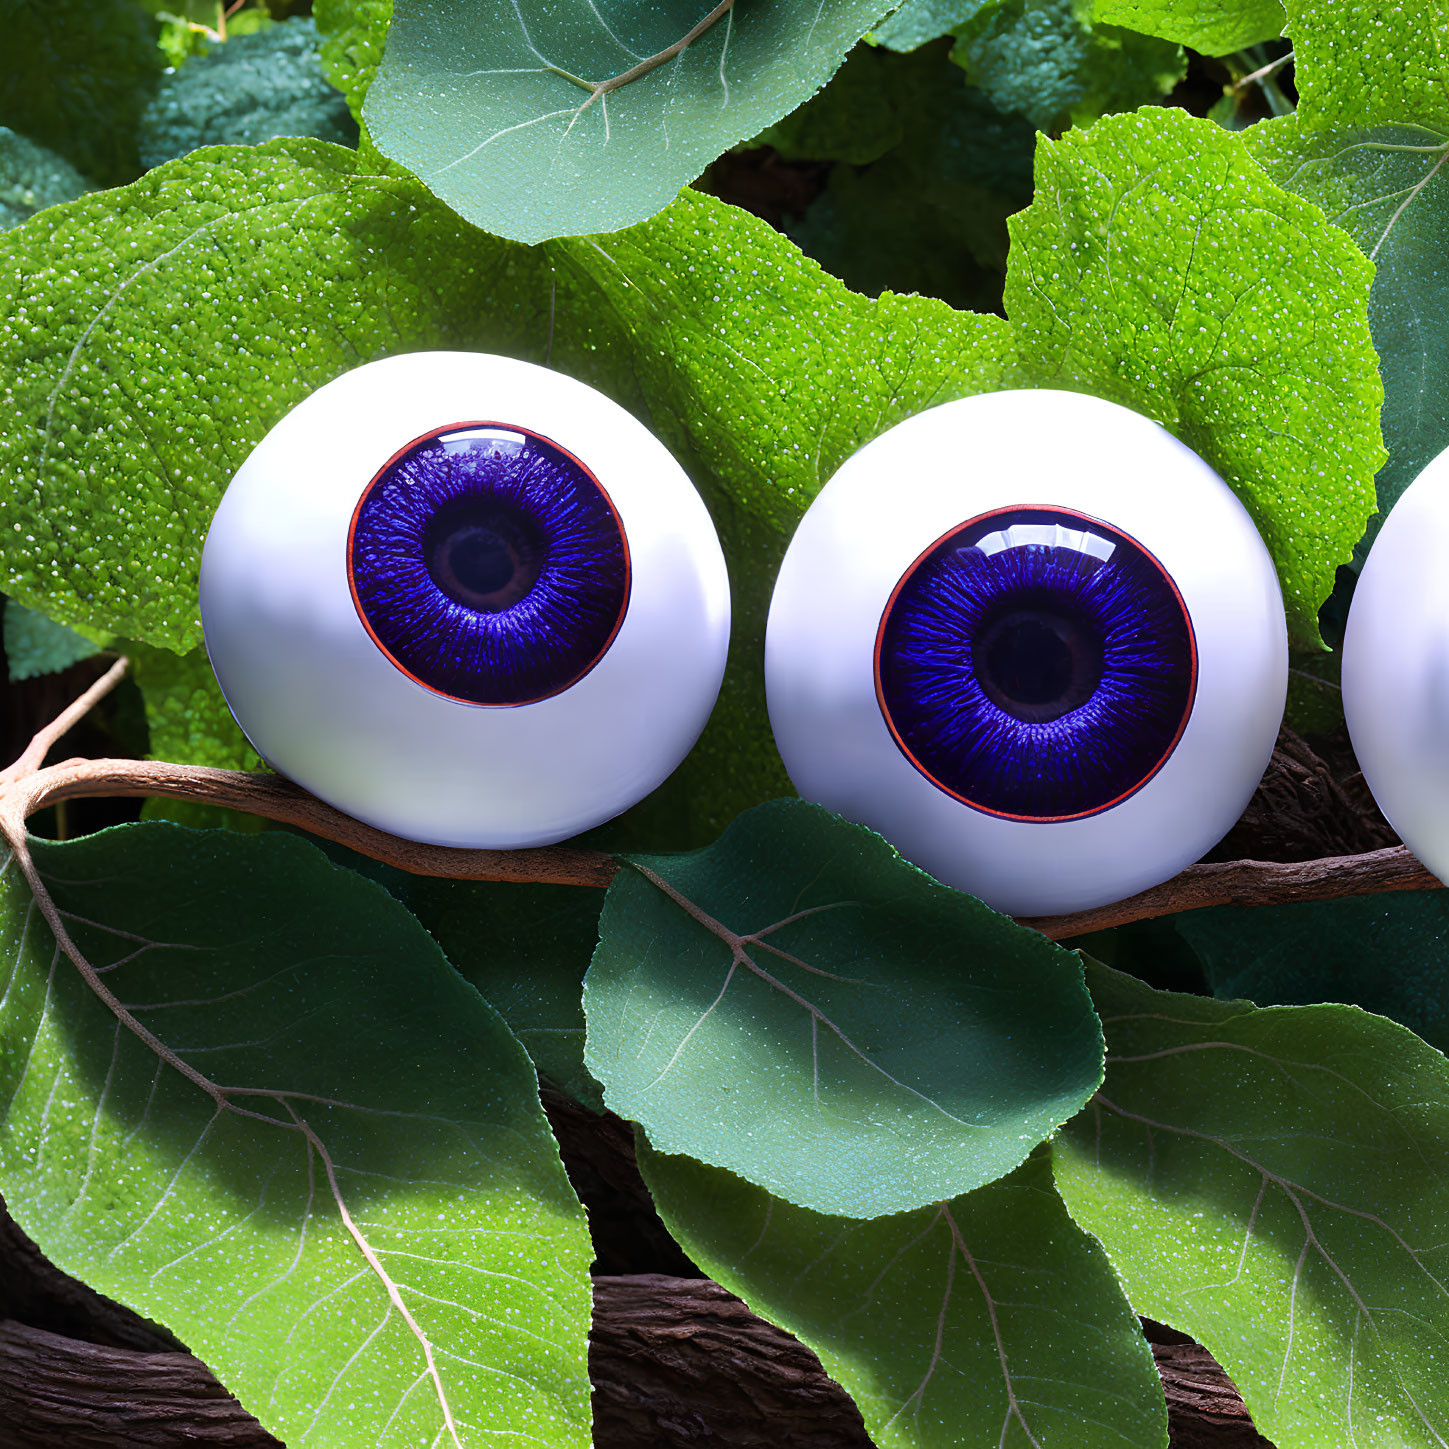 Realistic eyeballs with deep blue irises among vibrant green leaves